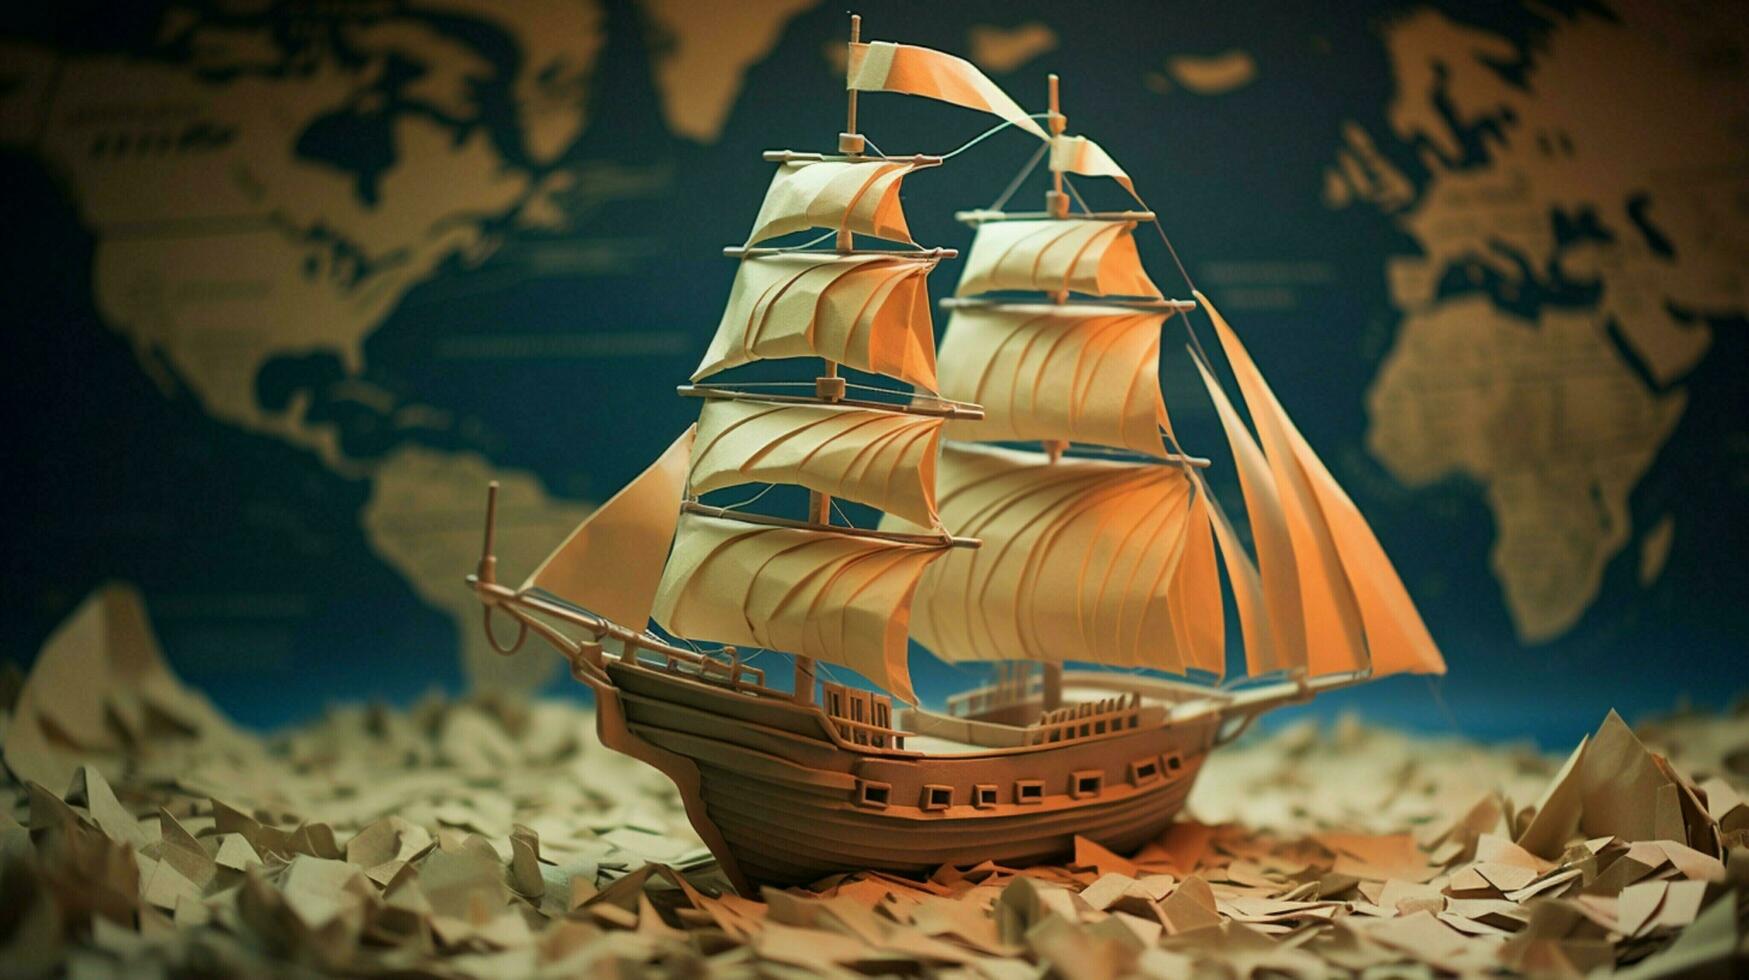 origami paper craft ship sails on imagination nautical photo